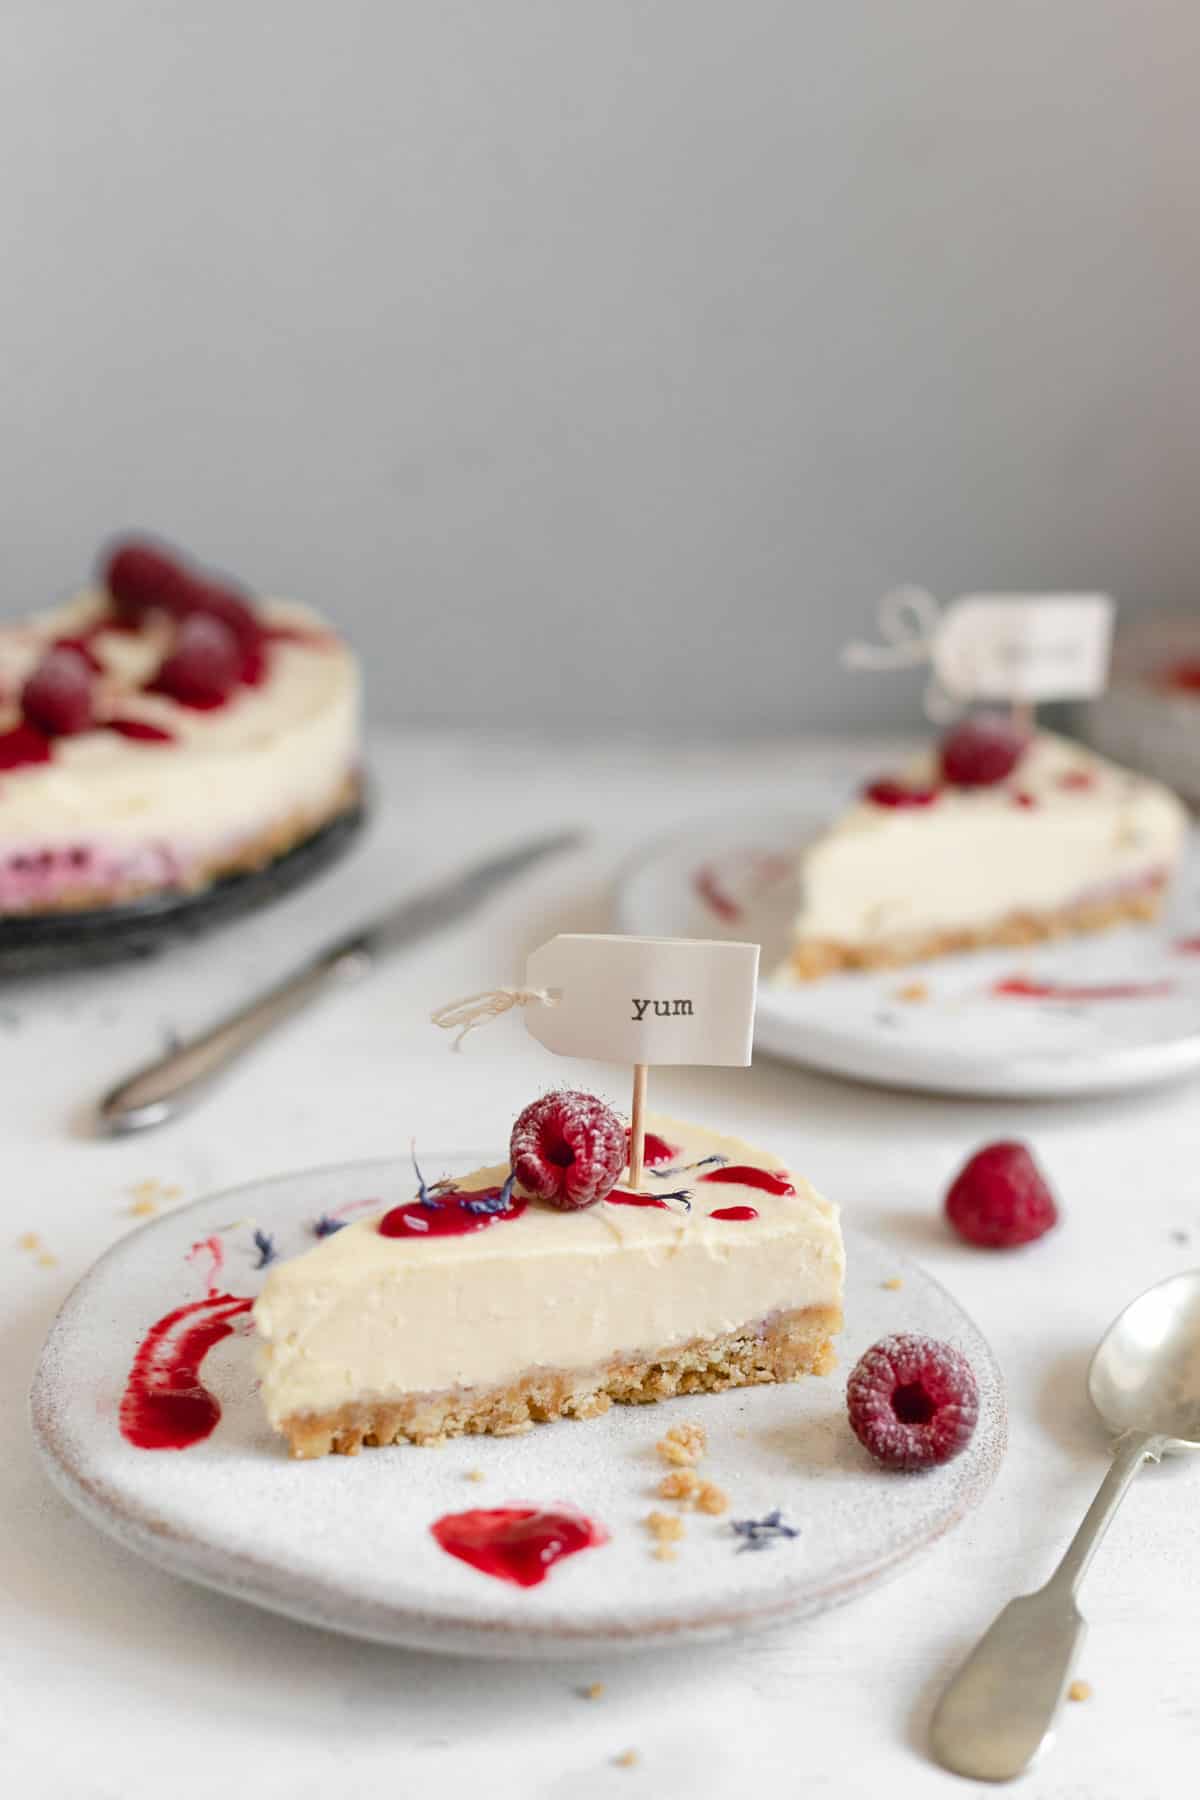 Slice of creamy and delicious raspberry and white chocolate cheesecake #cheesecakerecipe #cheesecake #nobakedessert | via @annabanana.co